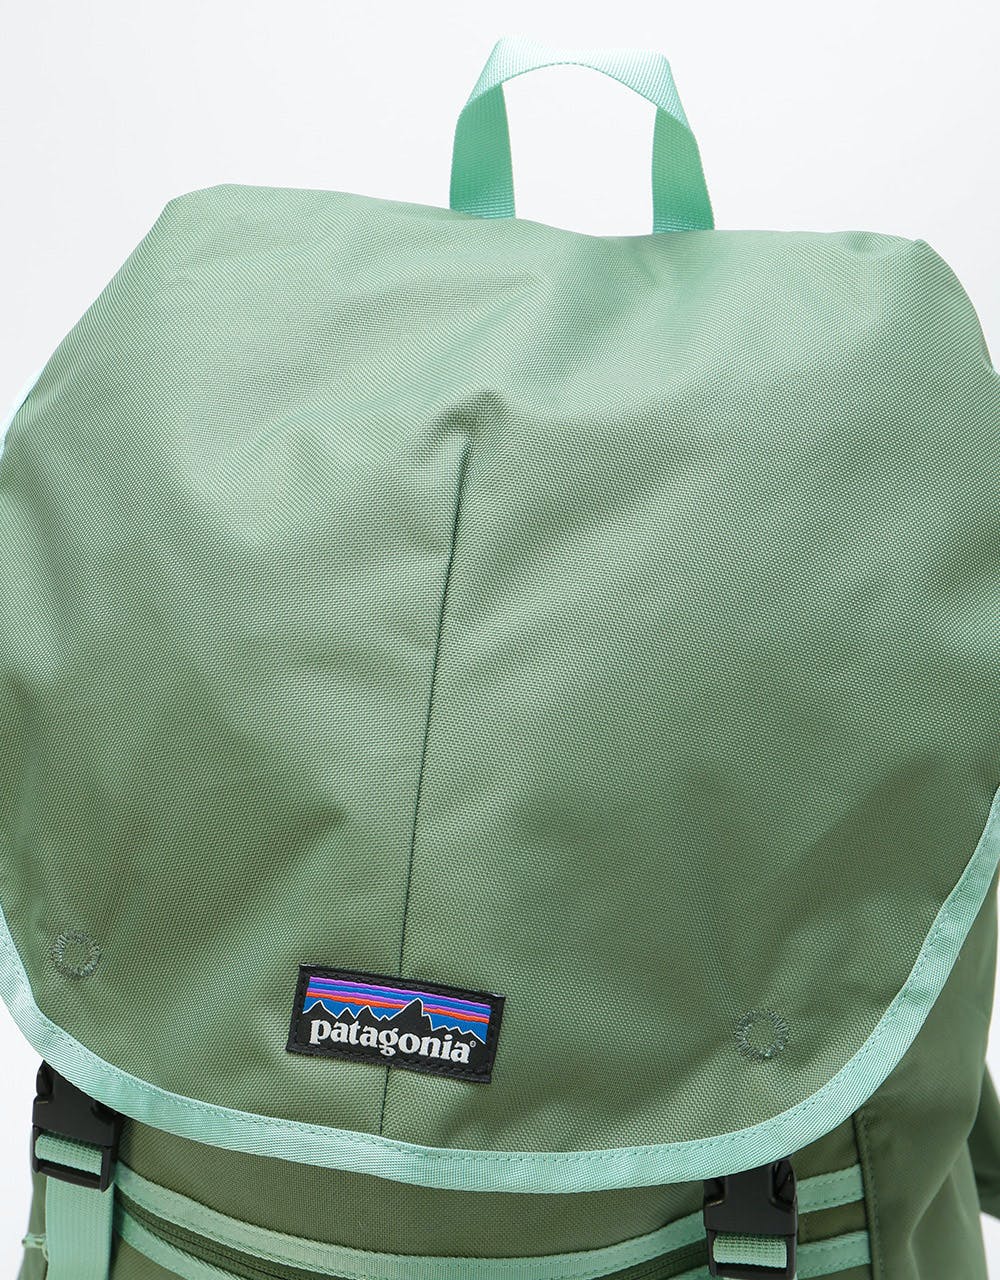 Patagonia Arbor Classic Pack 25L Backpack - Camp Green